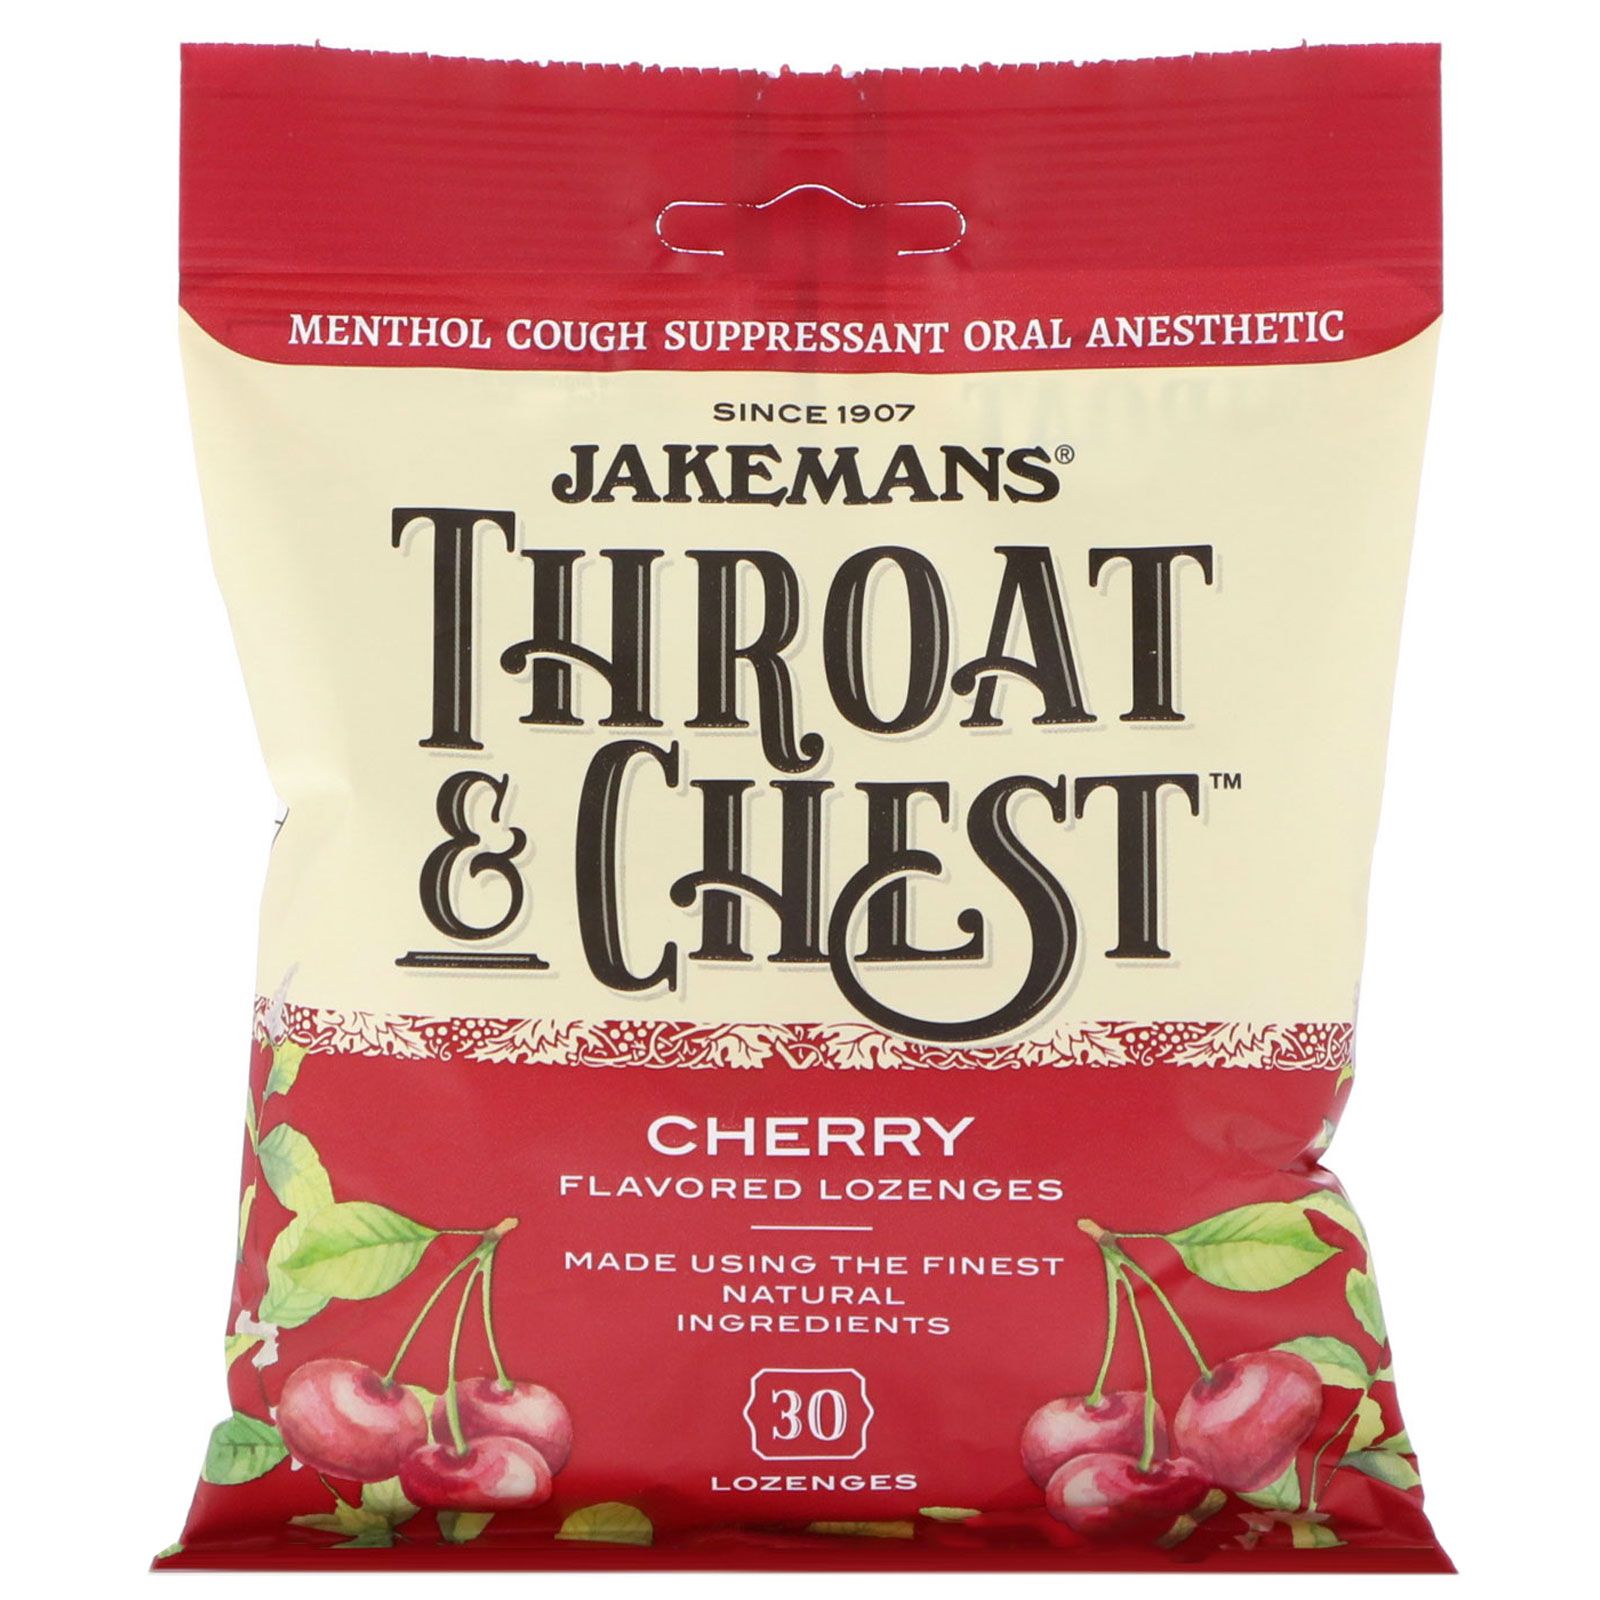 natural factors sore throat relief cherry 60 lozenges Jakemans Throat & Chest Cherry Flavored 30 Lozenges